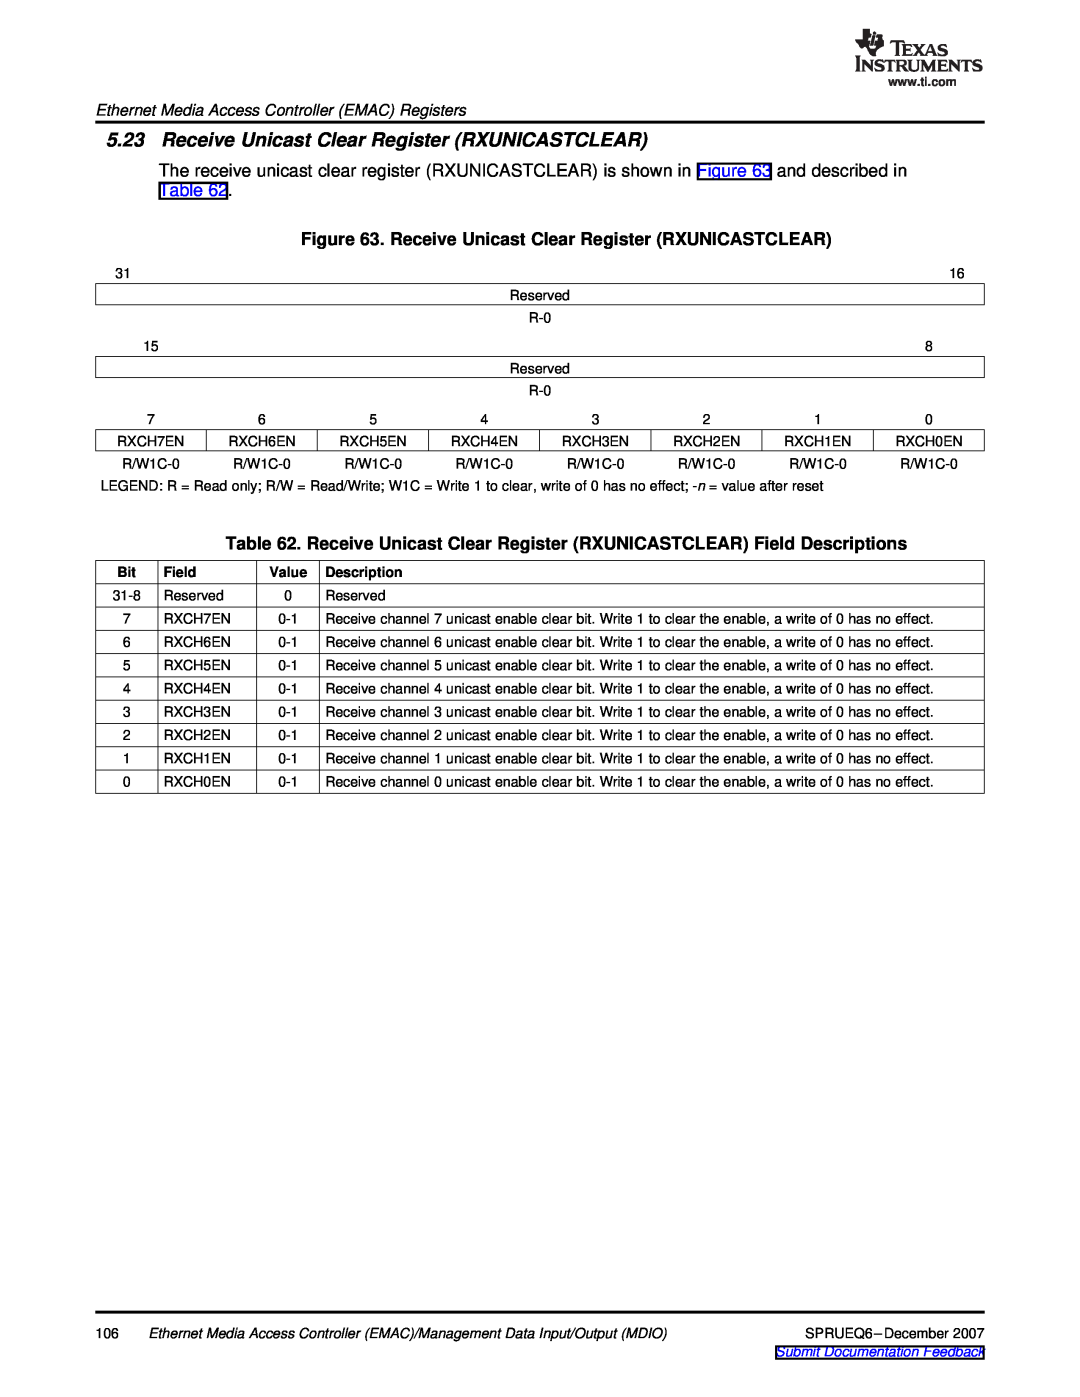 Texas Instruments TMS320DM646x manual Receive Unicast Clear Register RXUNICASTCLEAR, Field, Value, Description 